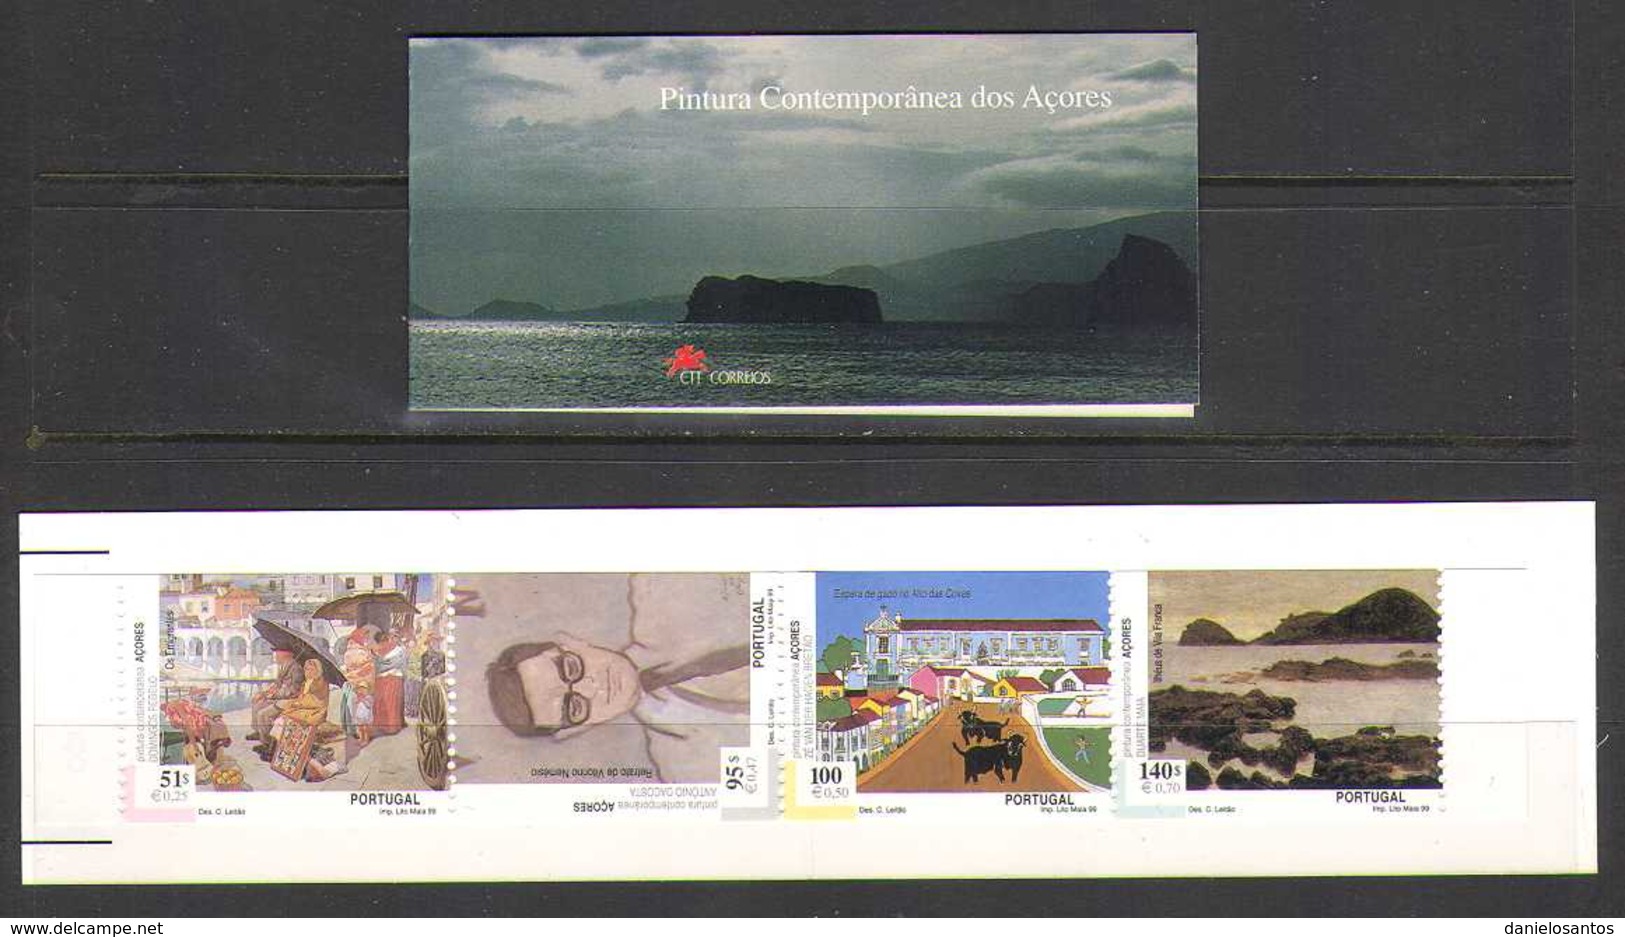 Portual Azores 1999 Paintings Of Azores - Pintura Contemporanea Dos Açores Booklet Caderneta 116 MNH - Paintings